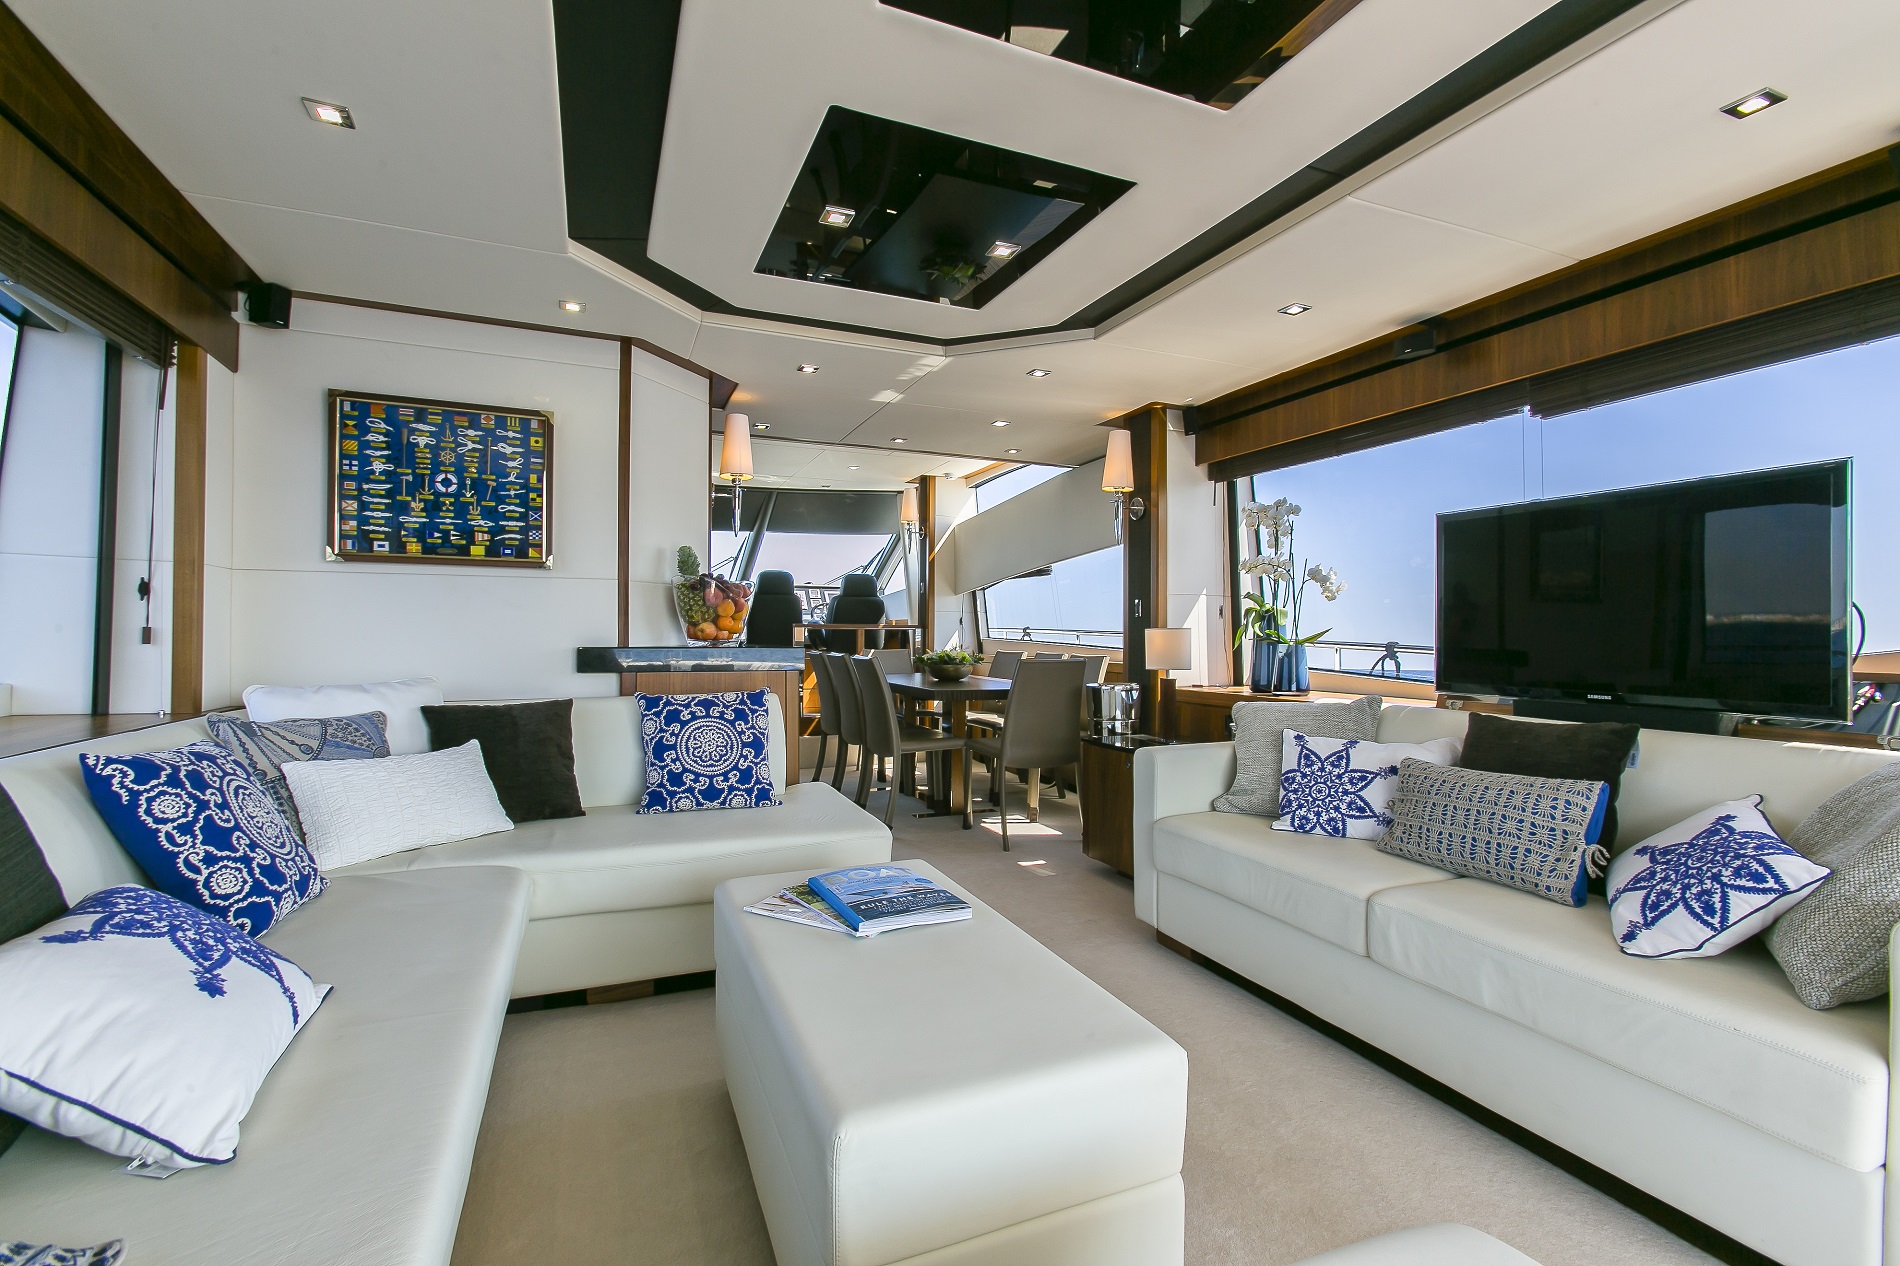 Sunseeker yacht 73M - Salon view to dining